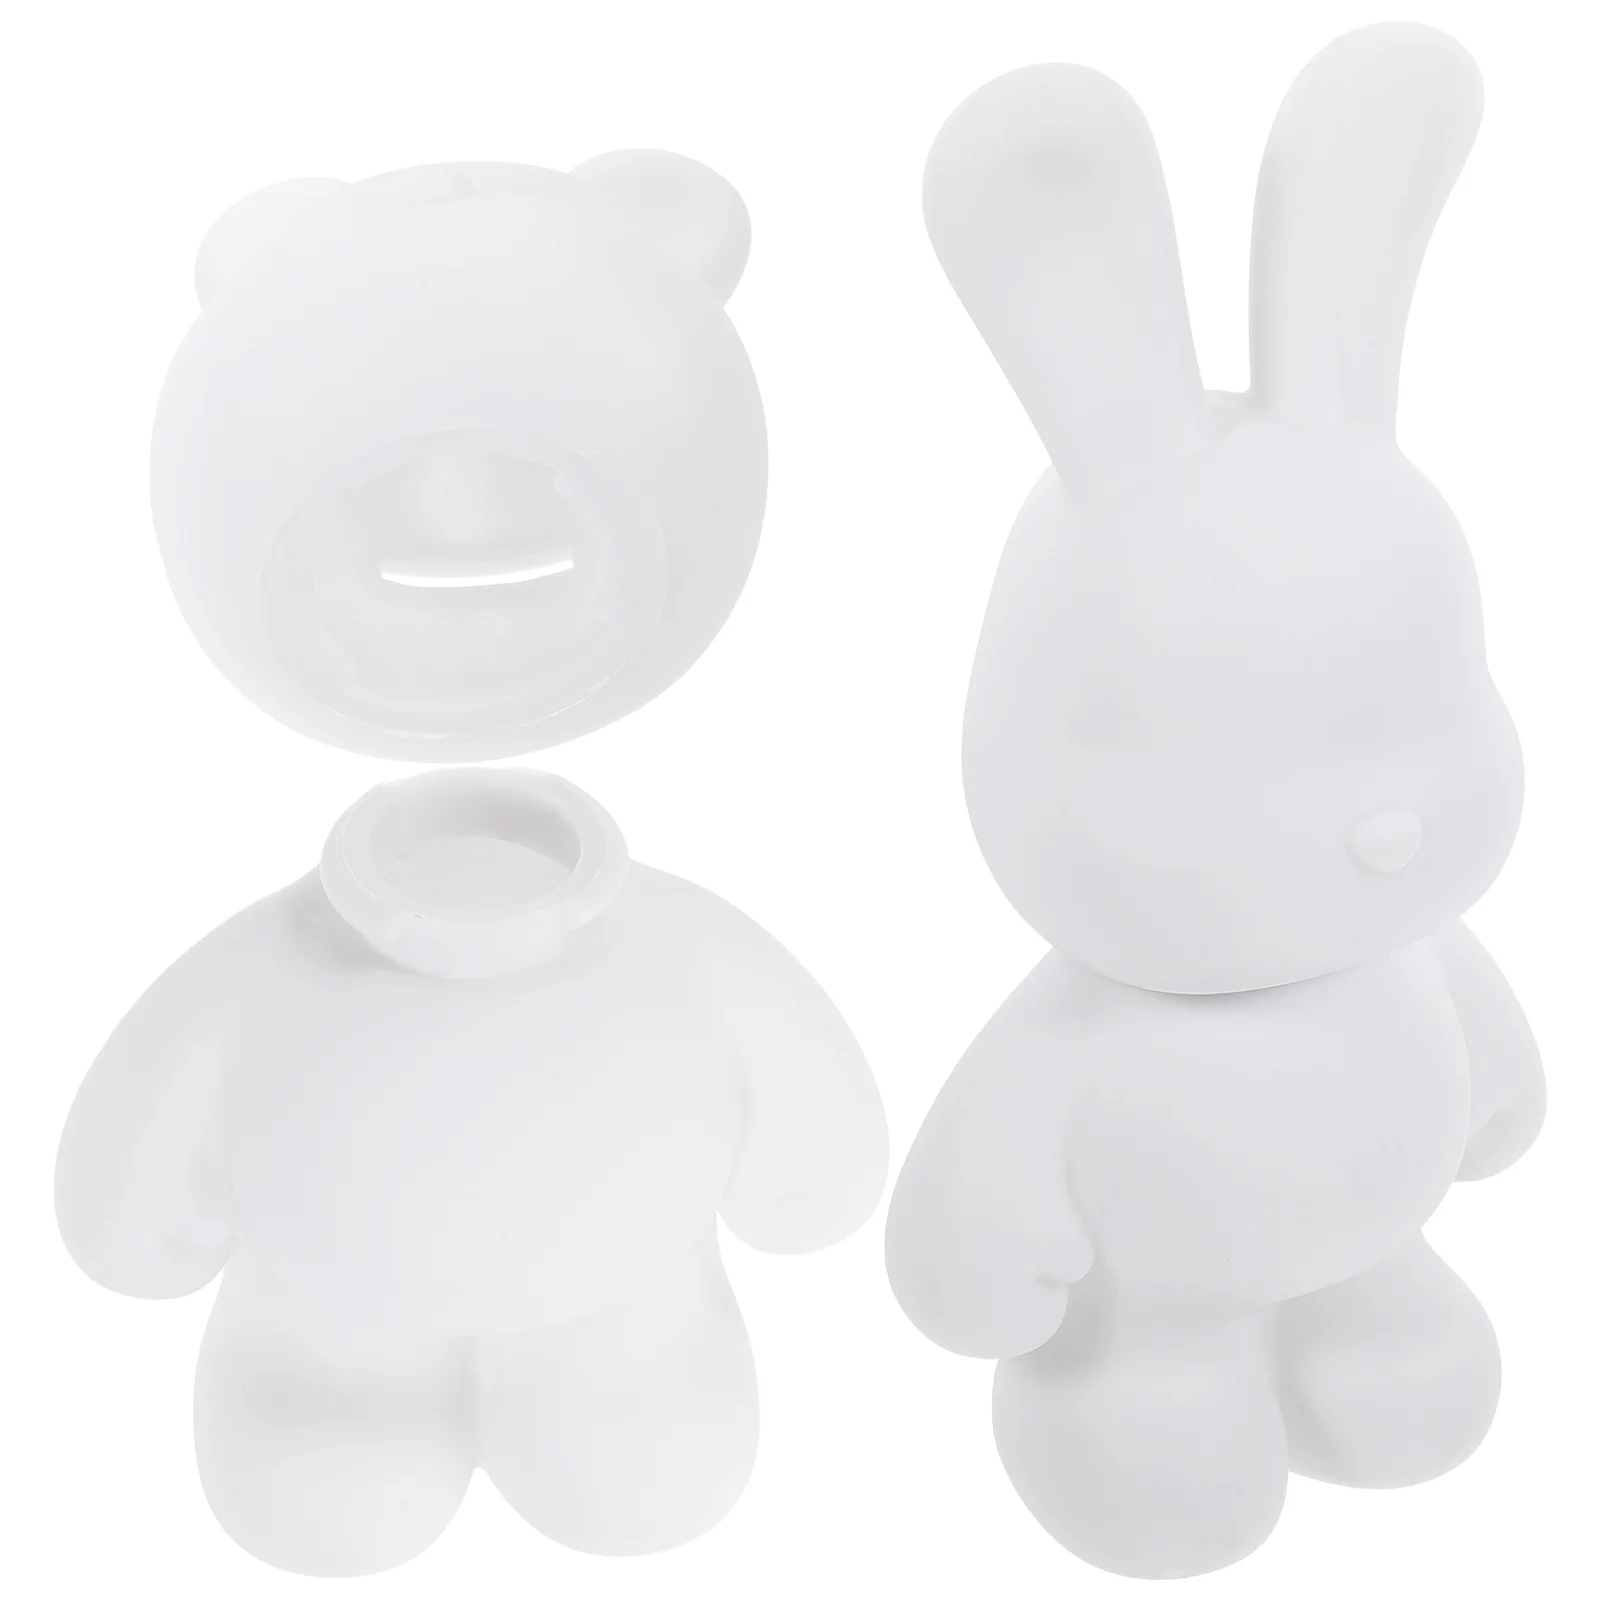 

2 Pcs Adulttoy White Embryo Rabbit Piggy Bank Kids Supply Cute Home Cartoon Bunny Figurine Child